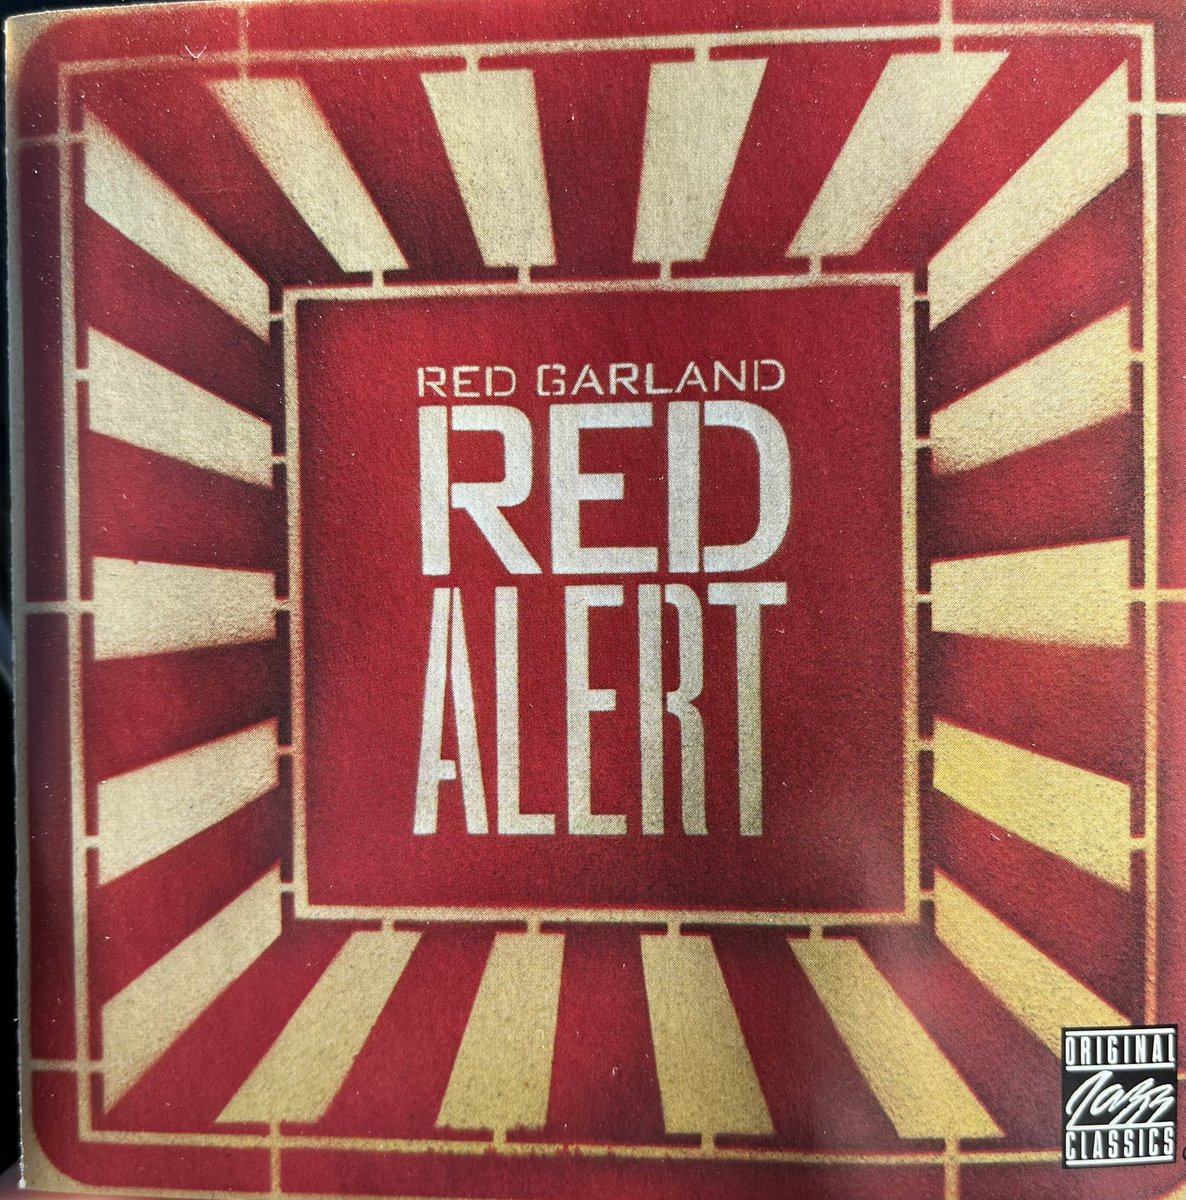 Today’s car listening! #redgarland #roncarter #albumoftheday #cdoftheday